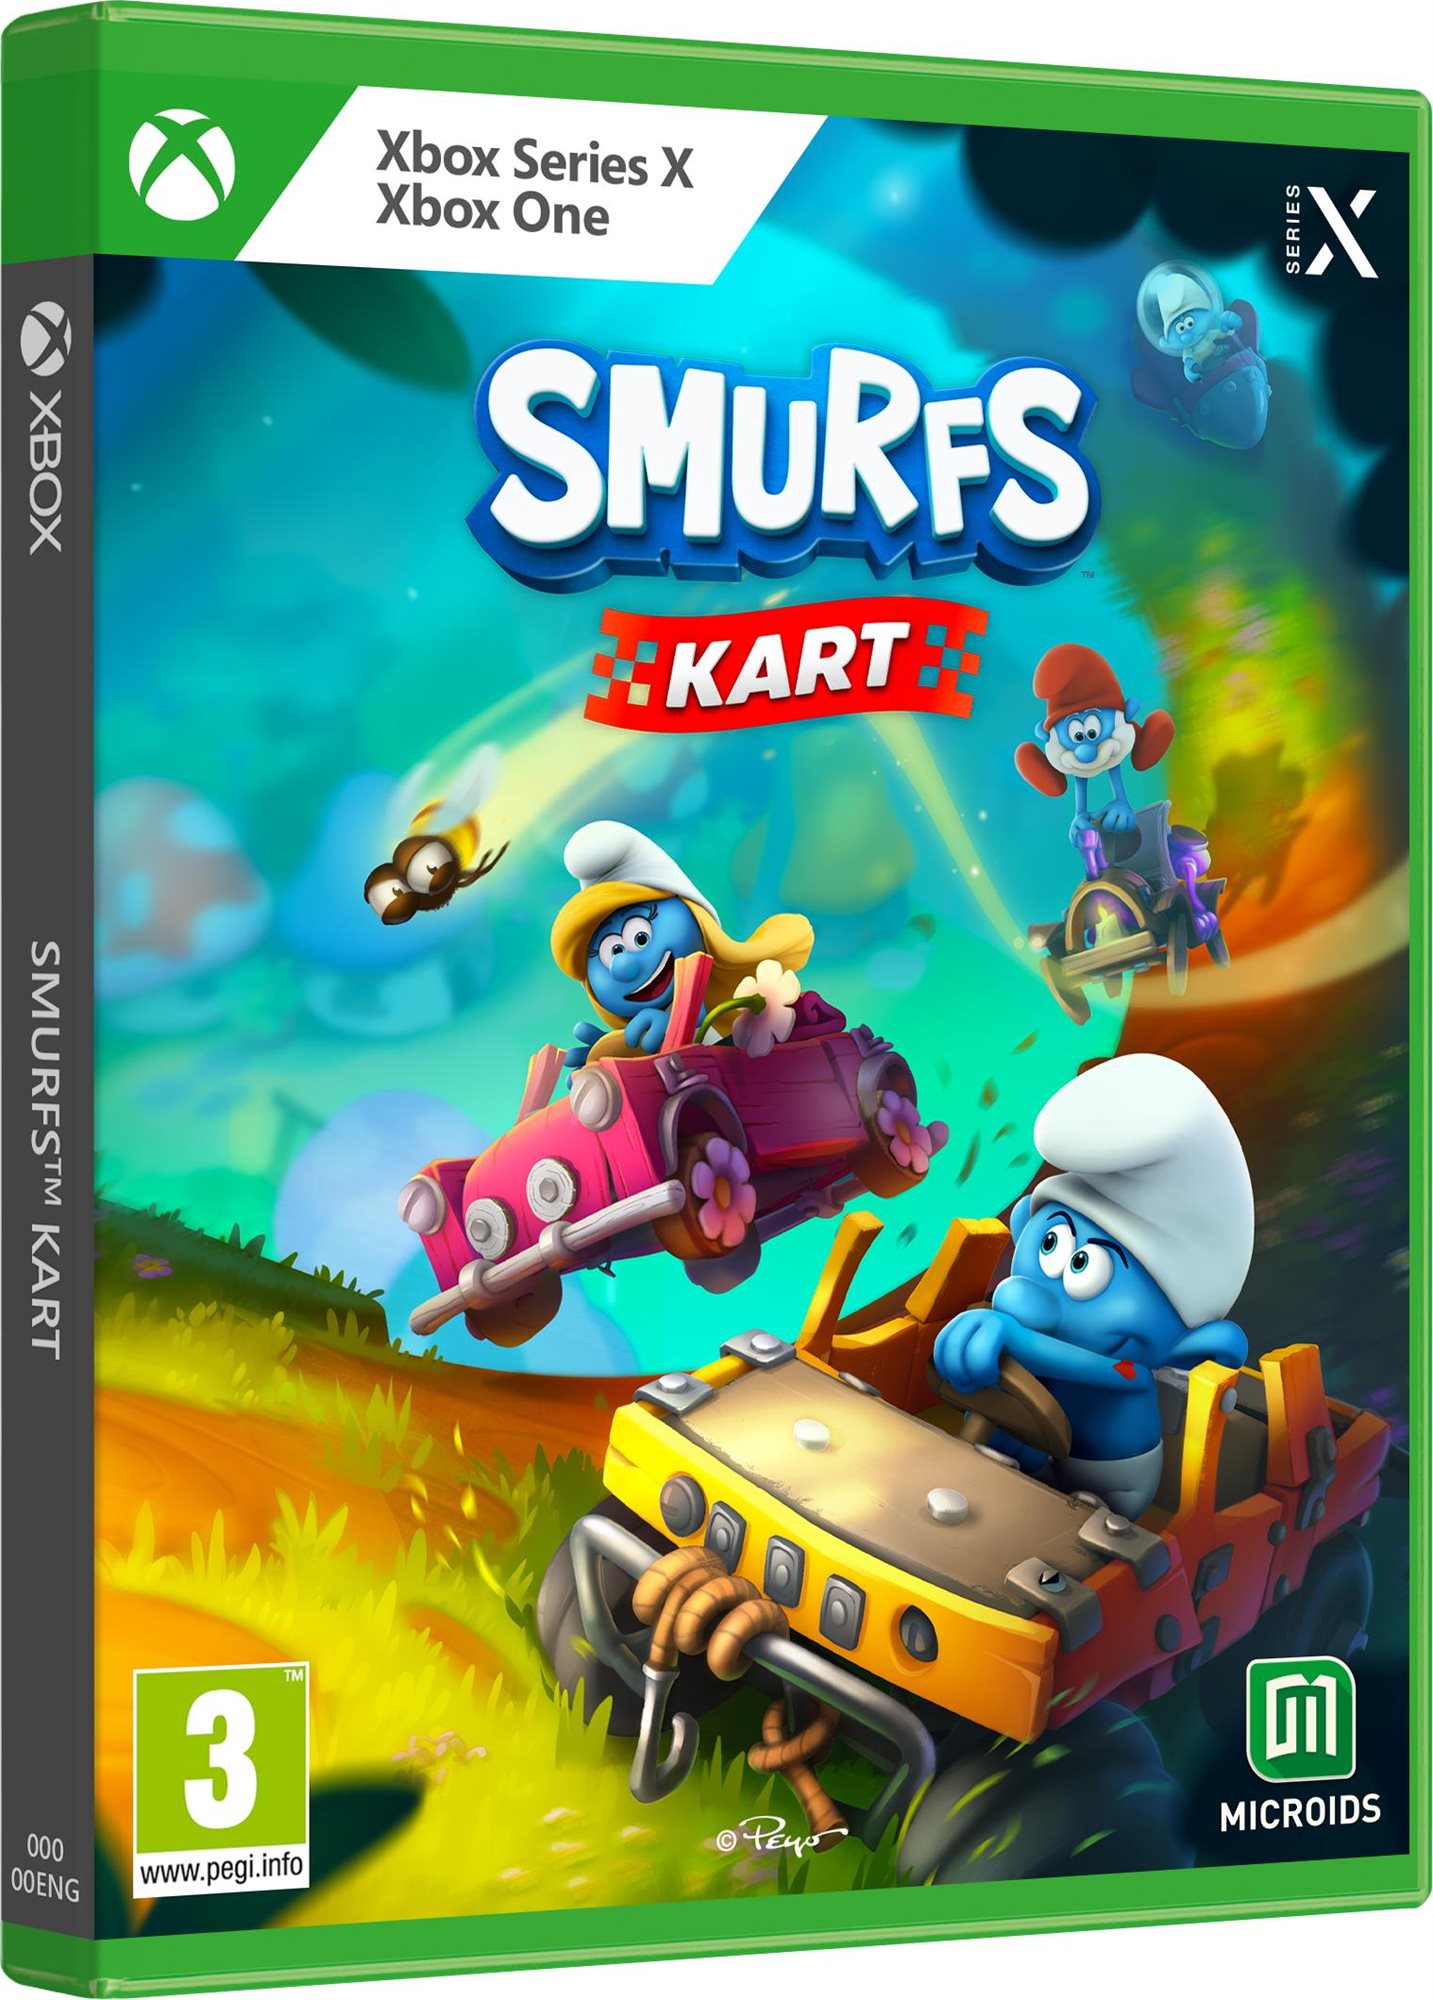 Konzol játék Smurfs Kart - Xbox